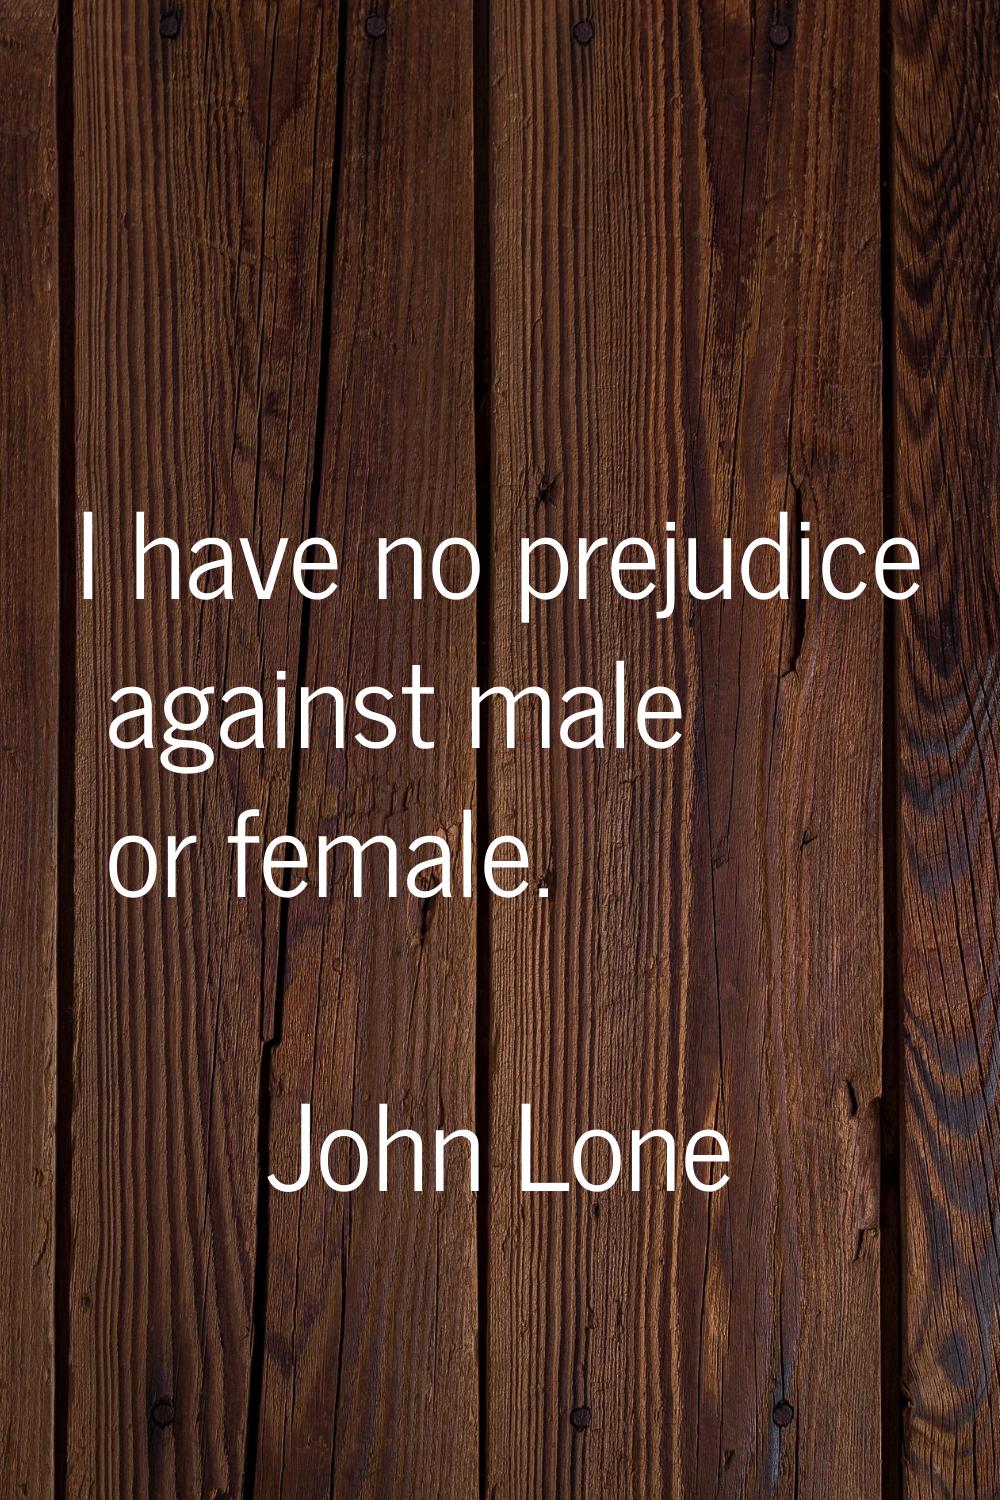 I have no prejudice against male or female.